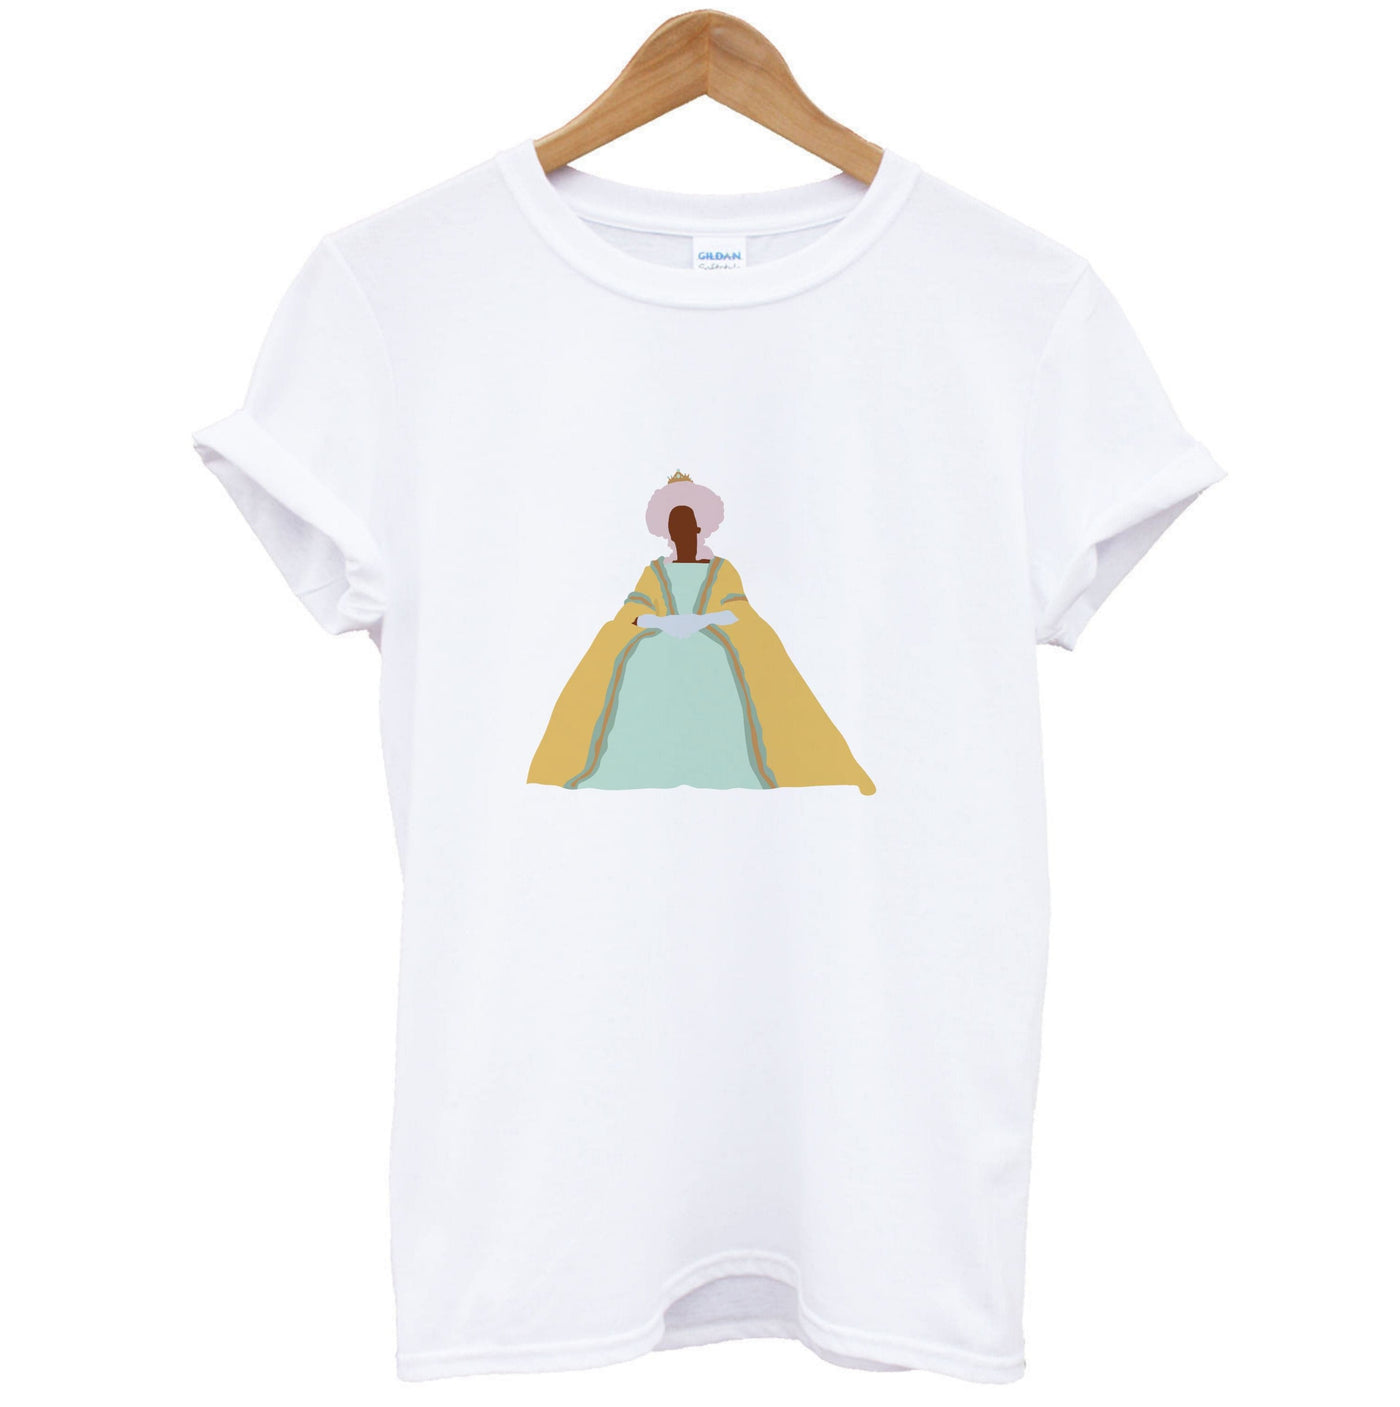 Queen - Queen Charlotte T-Shirt